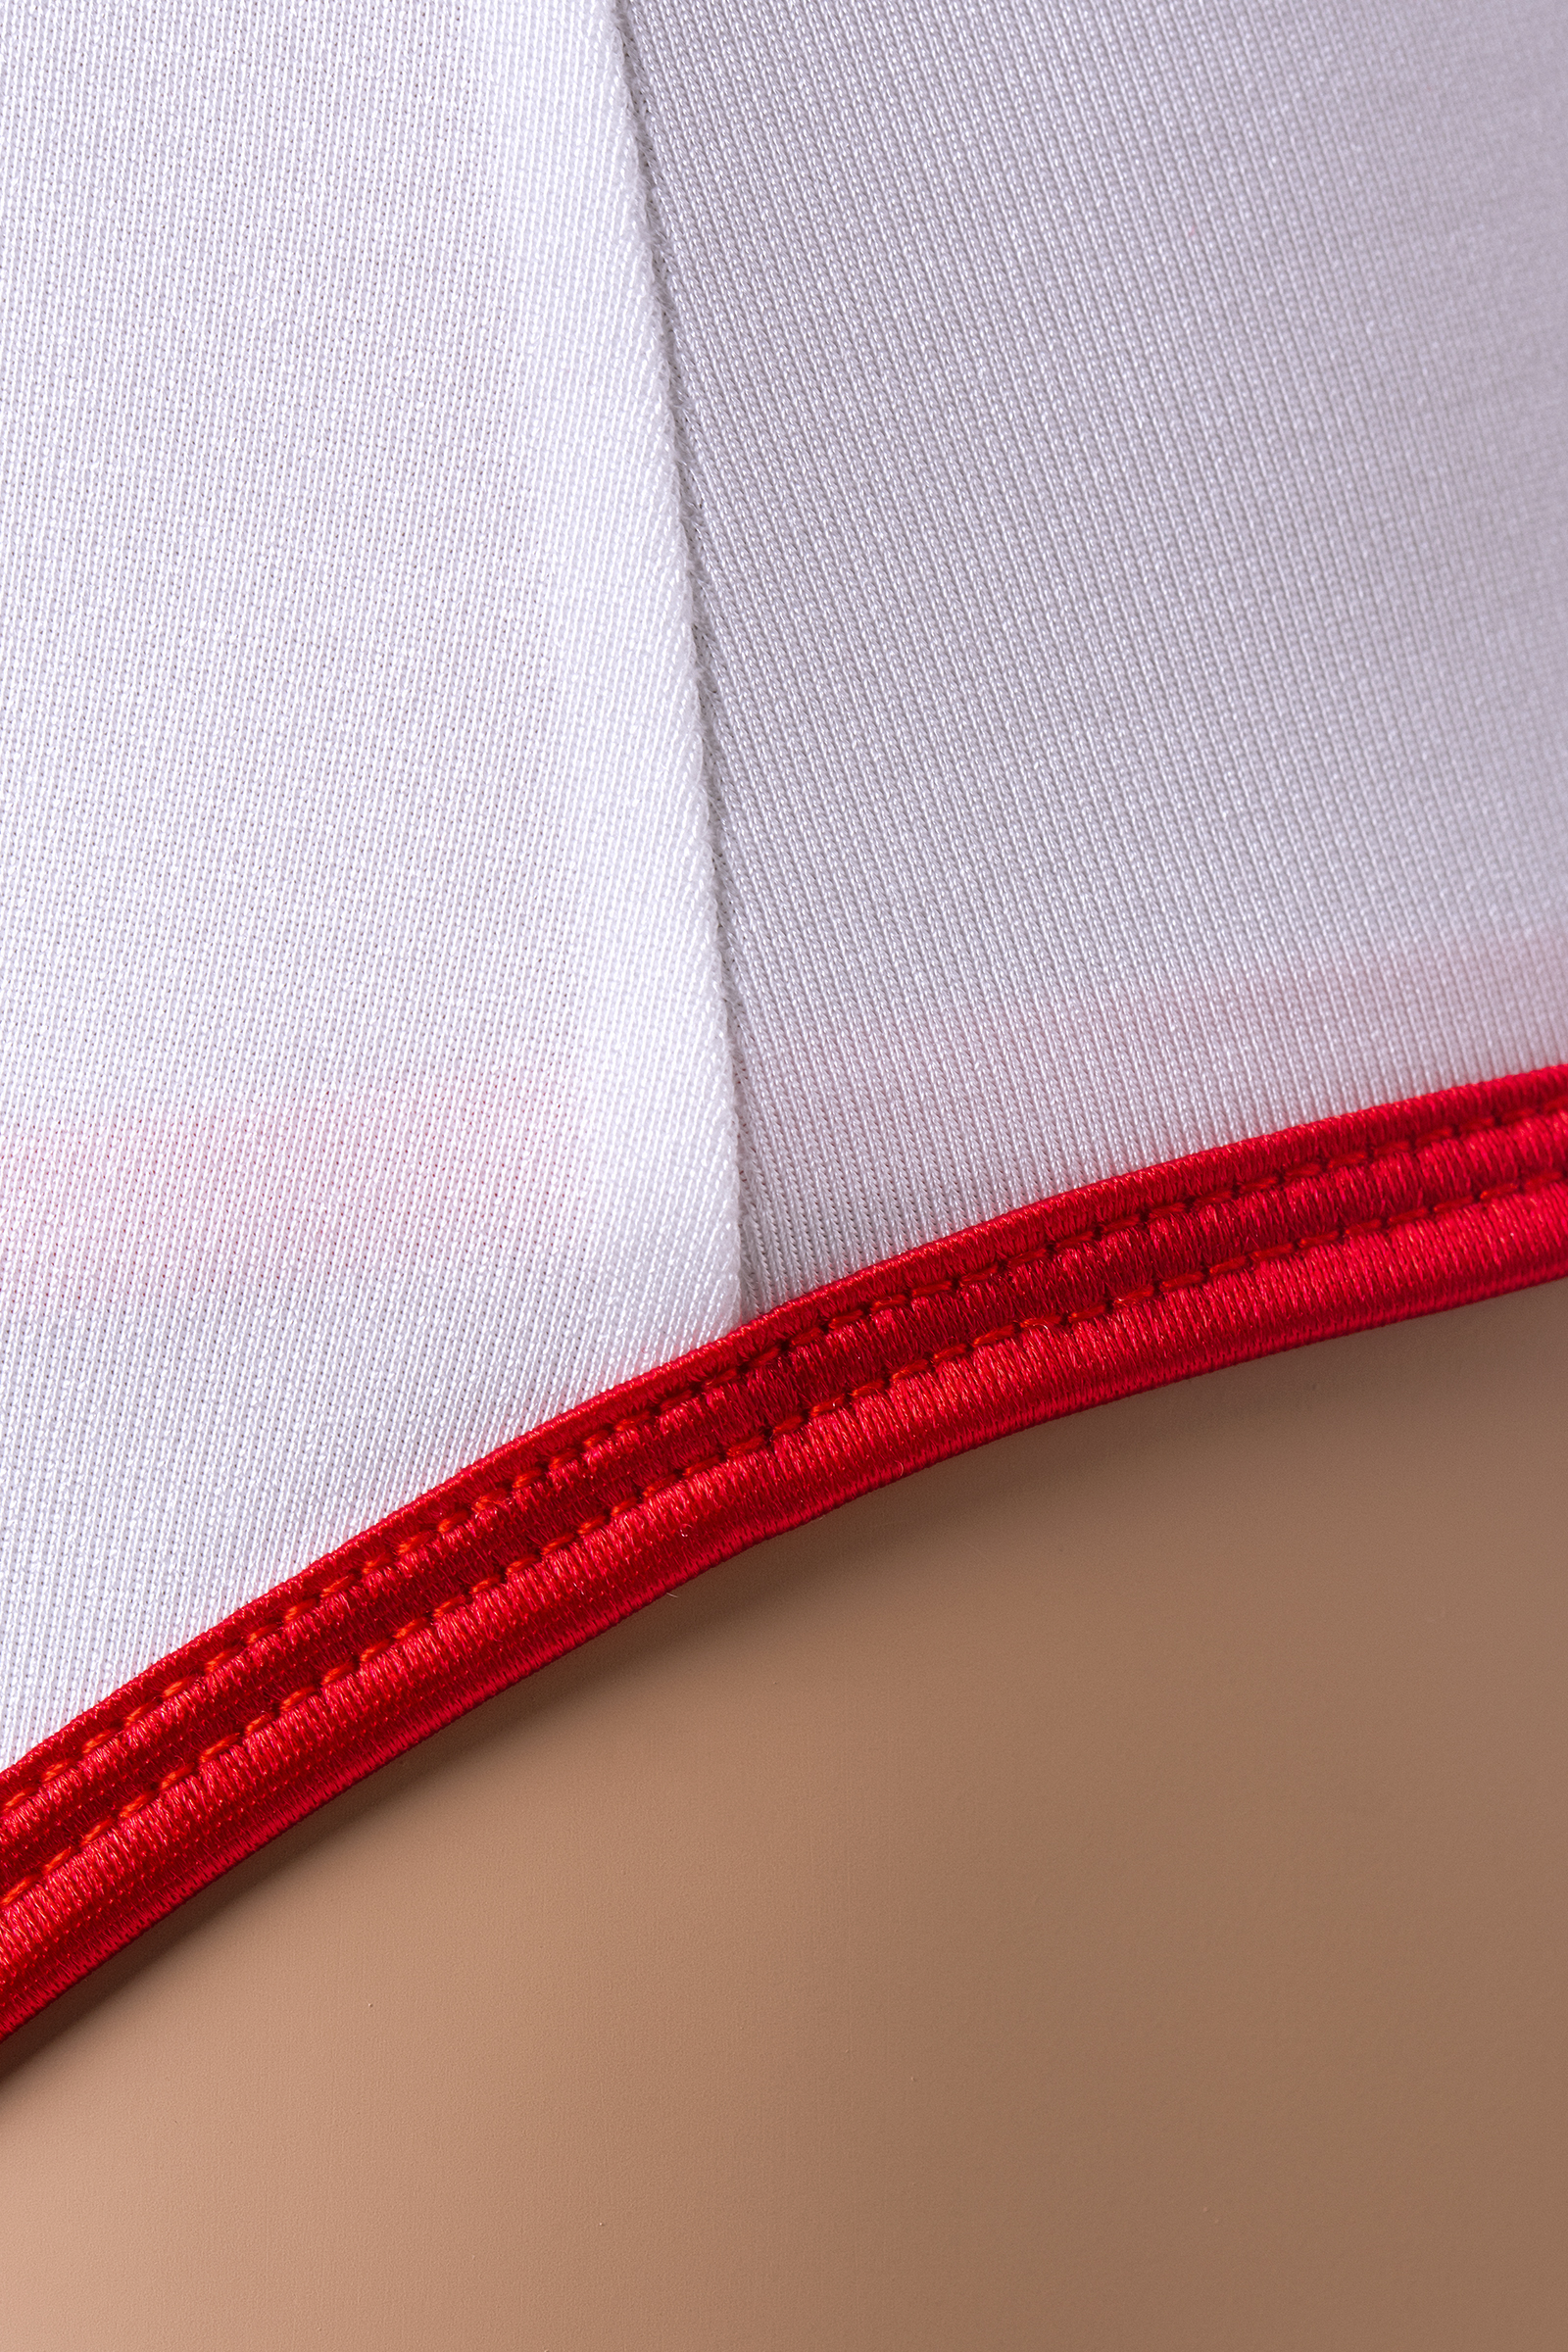 Костюм медсестры Candy Girl Leann (топ, стринги, чулки), бело-красный, OS. Фото N8